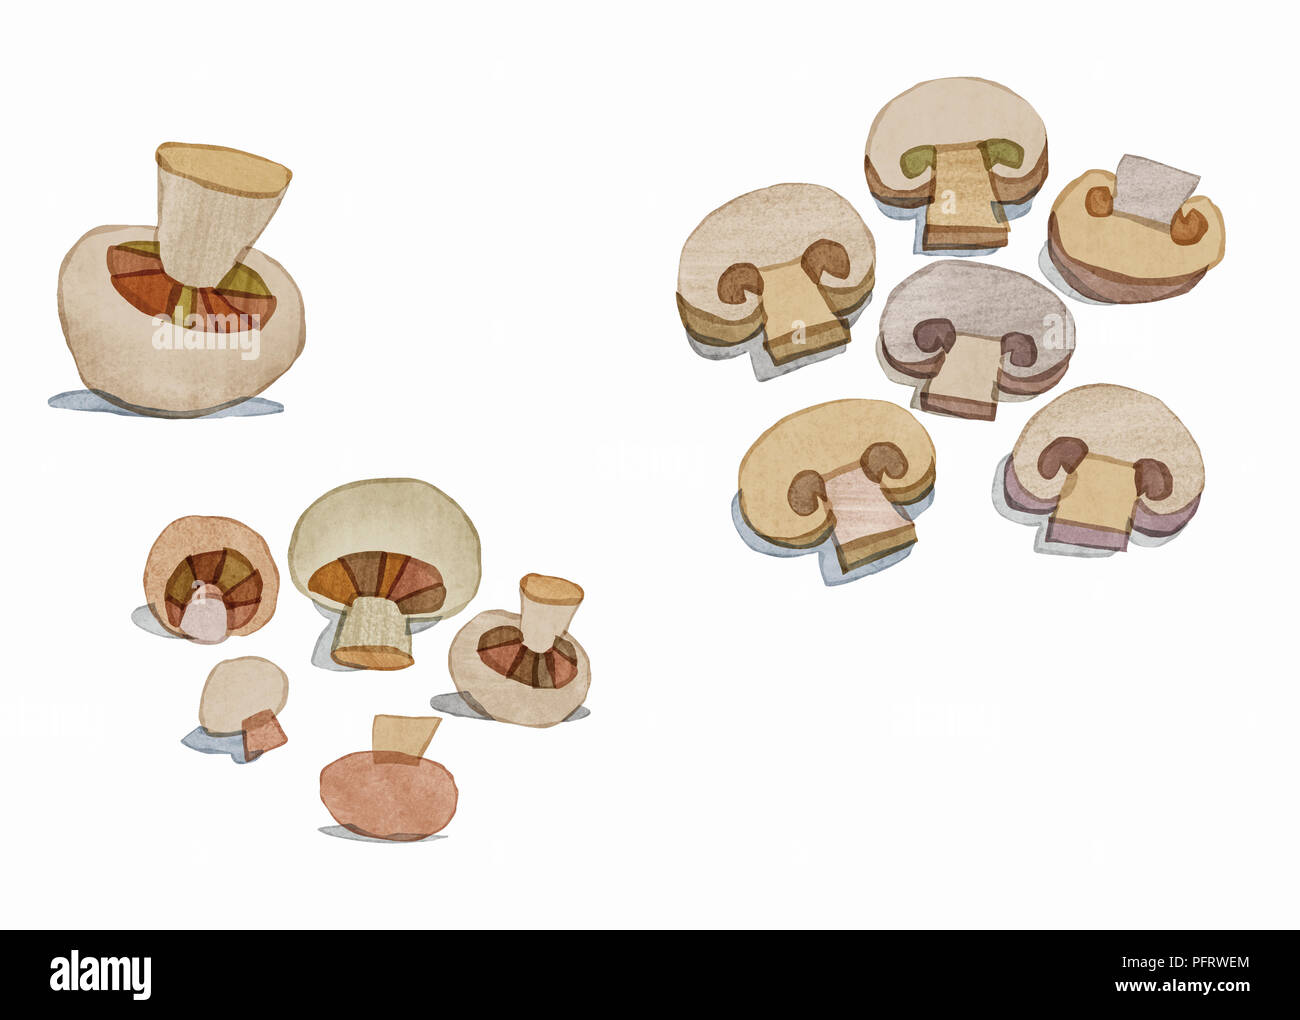 Illustration, Mushrooms, whole and sliced Stock Photo